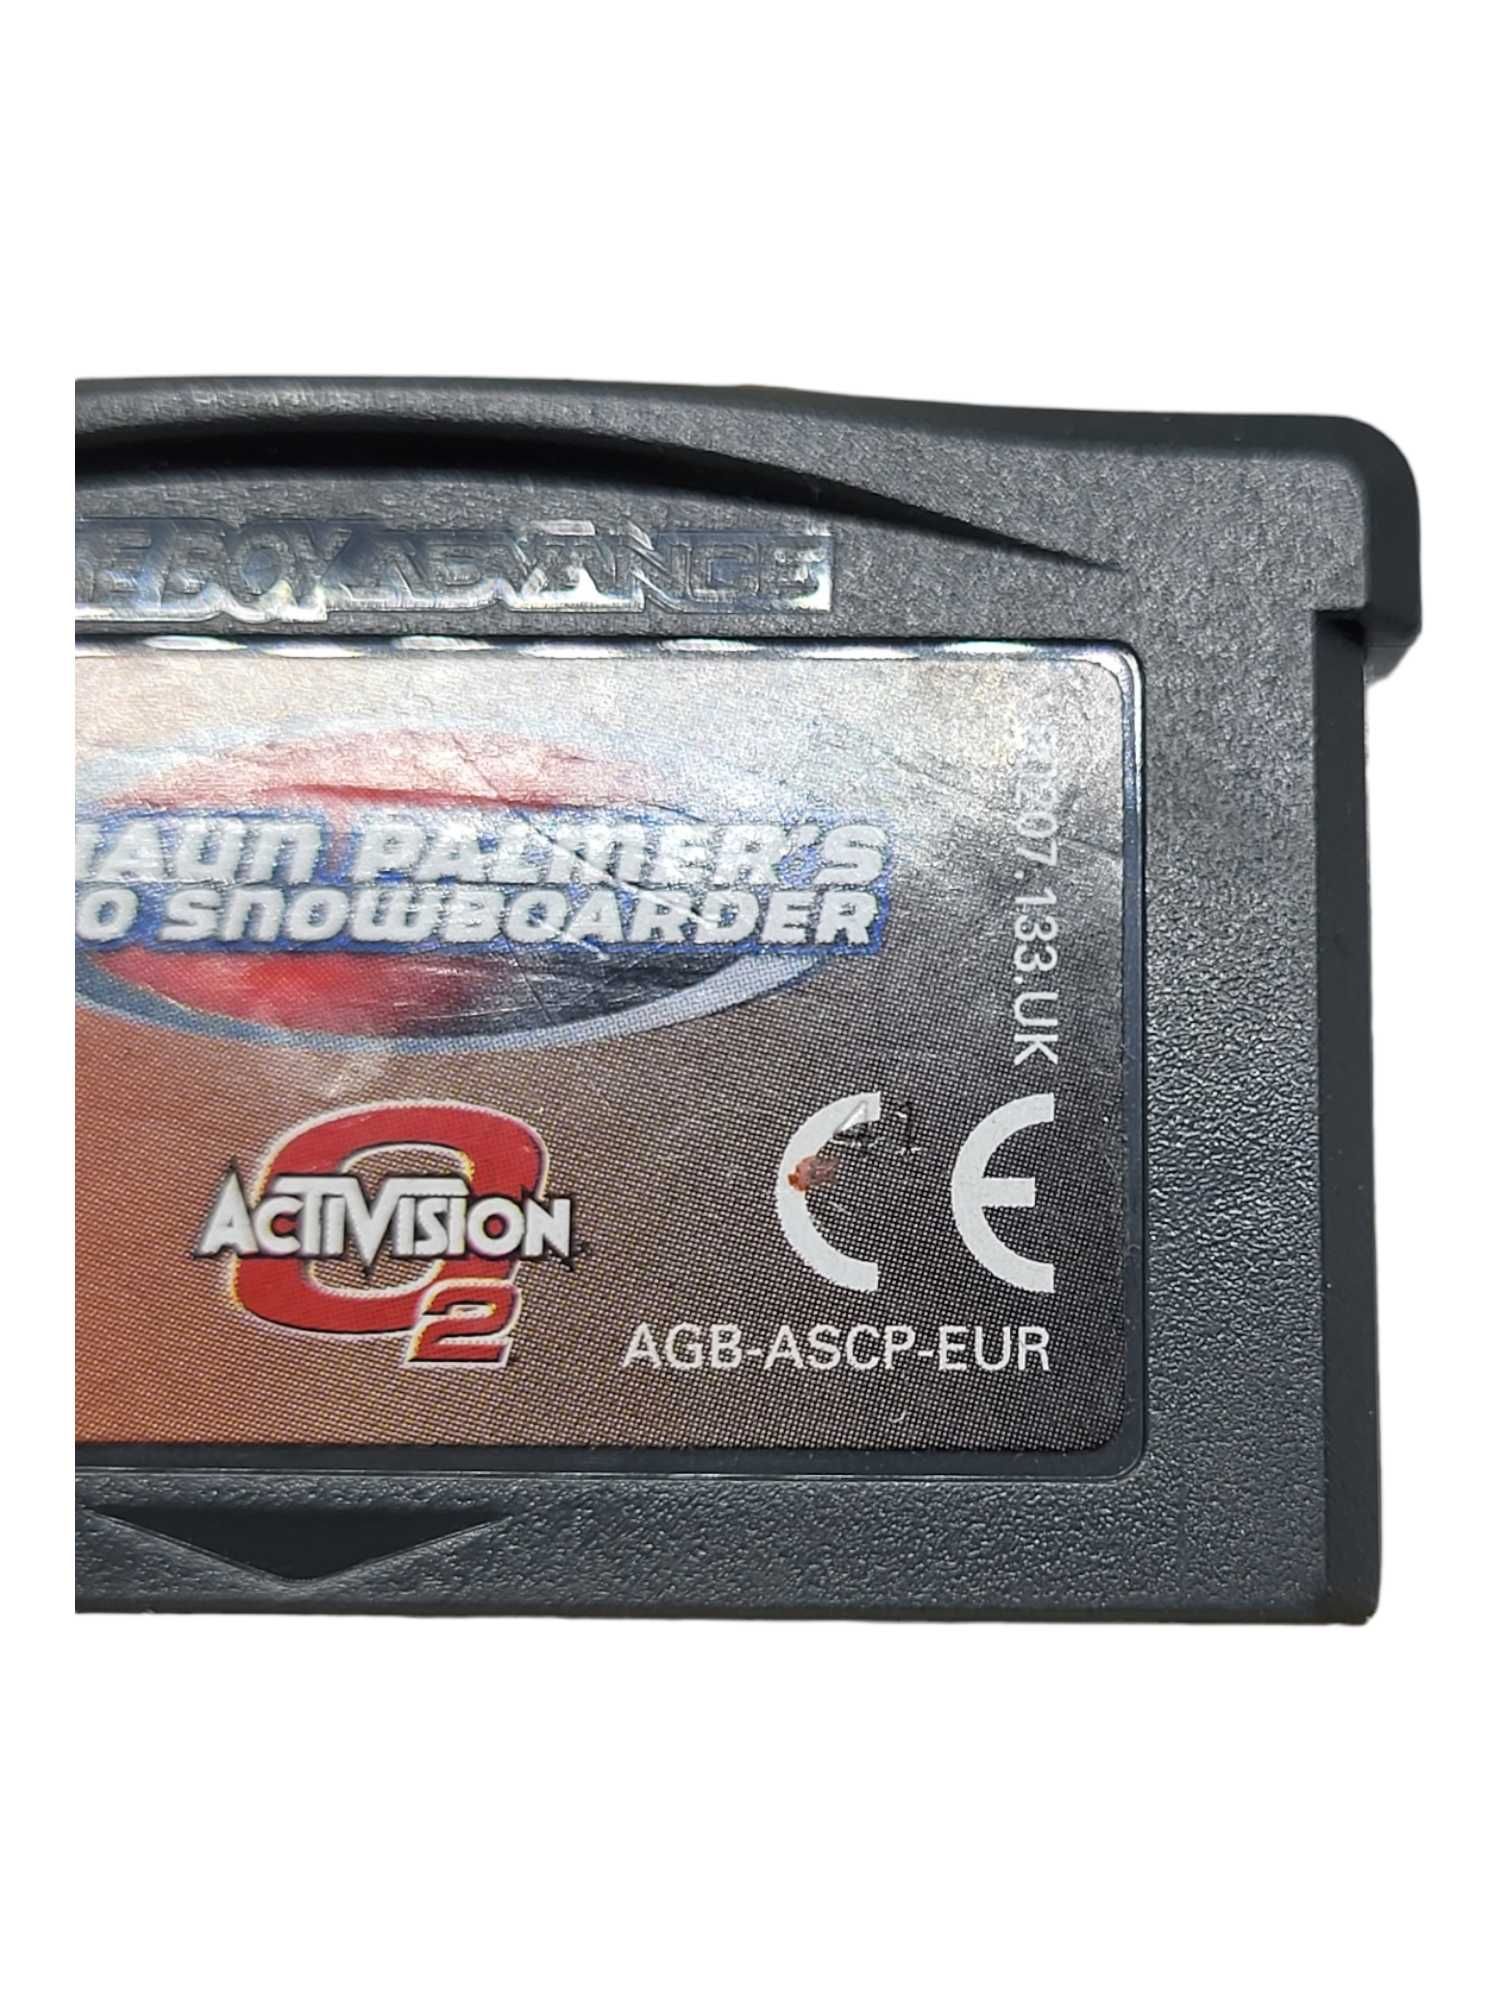 Shaun Palmer's Pro Snowboarder Game Boy Gameboy Advance GBA